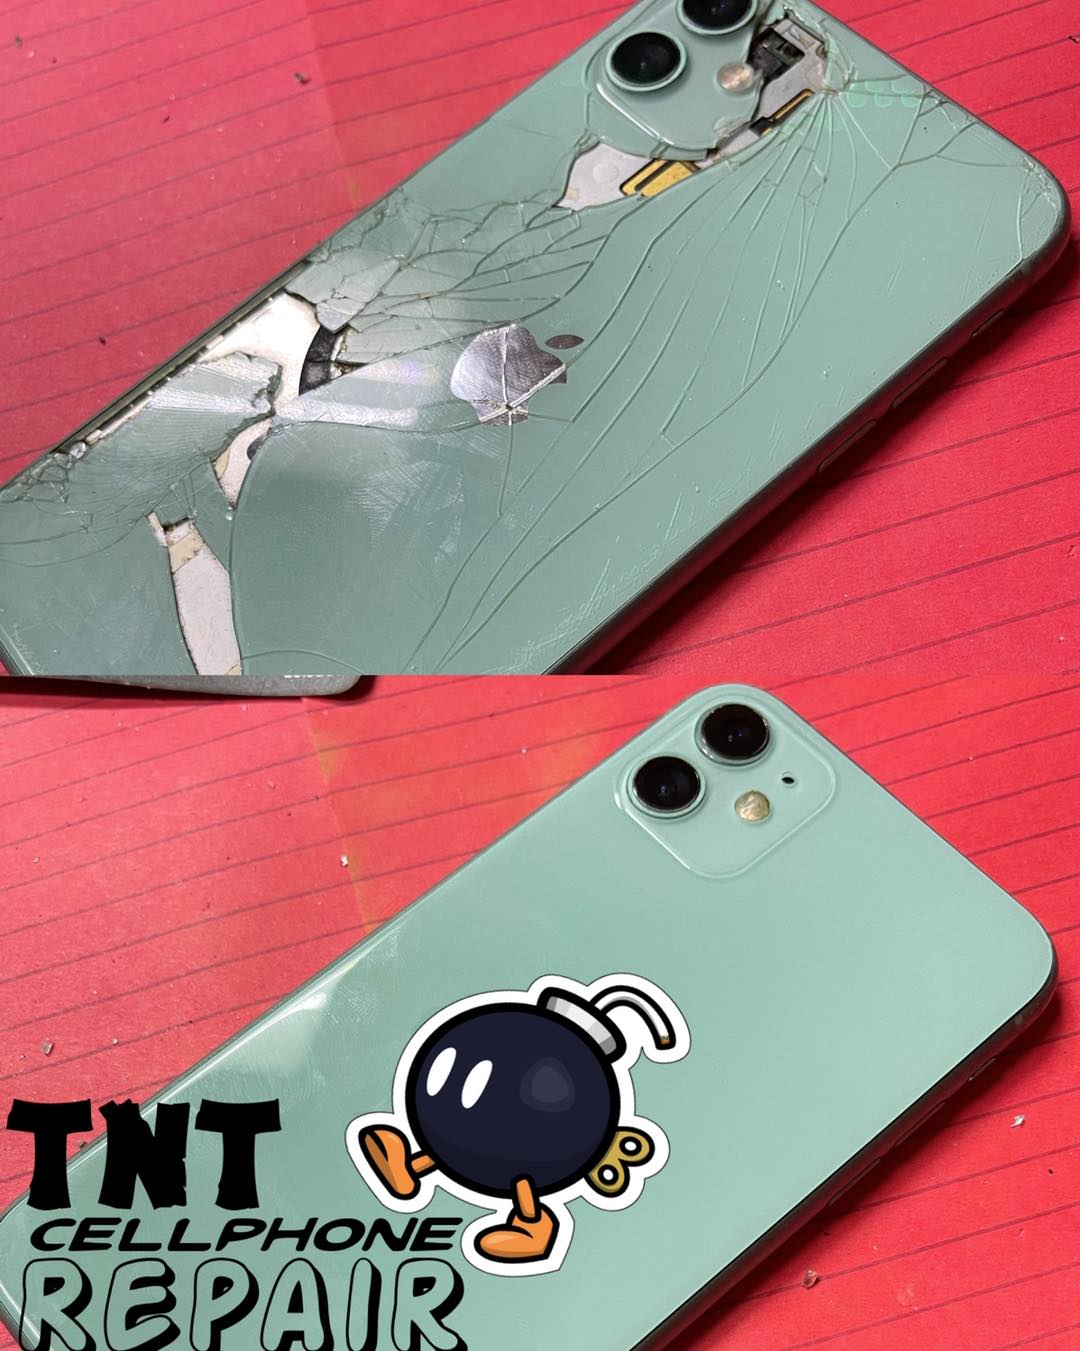 TNT Cellphone Repair